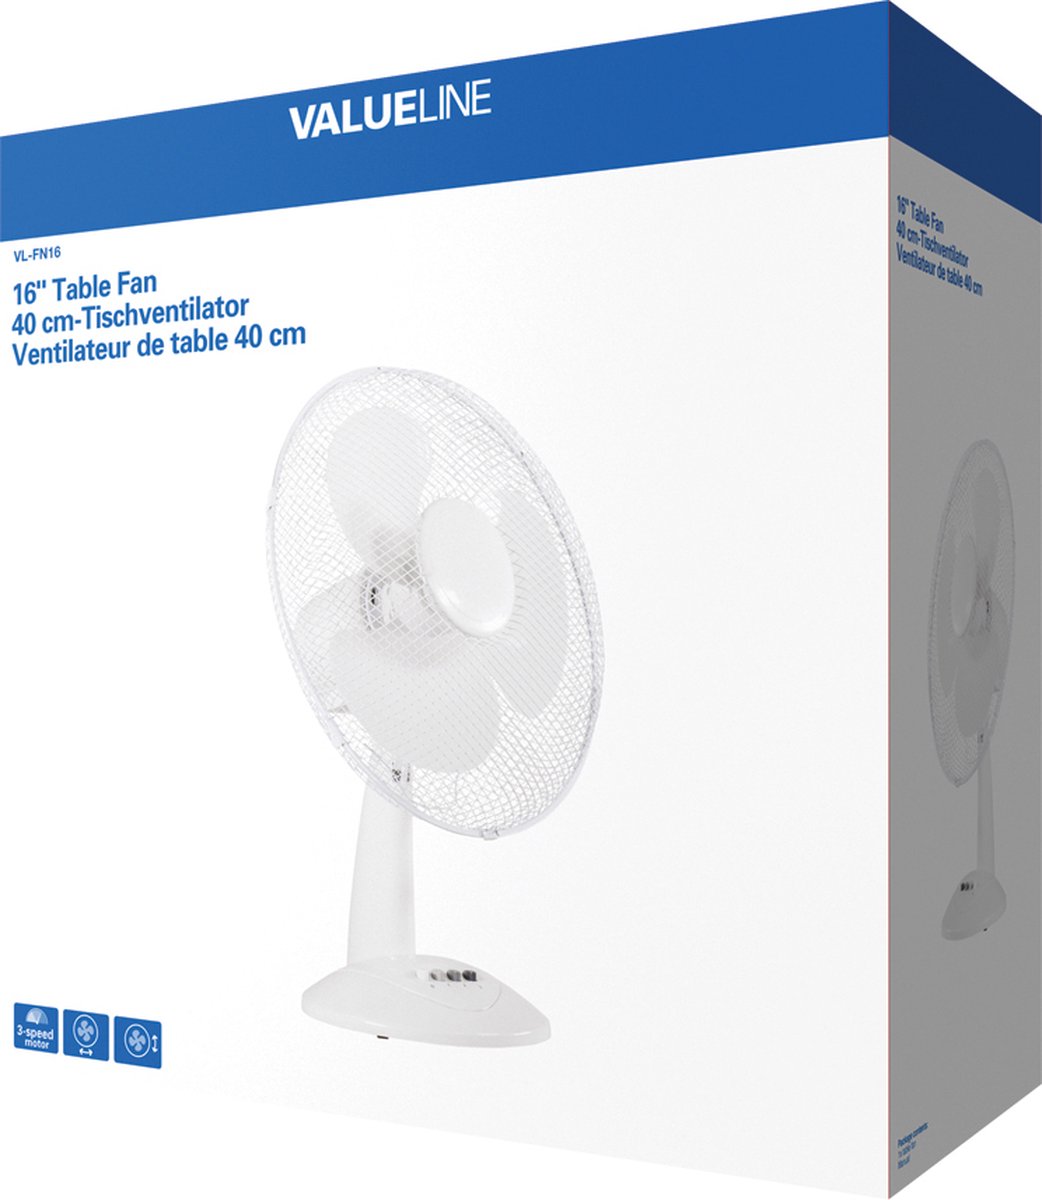 Valueline VL-FN16 ventilateur | bol.com